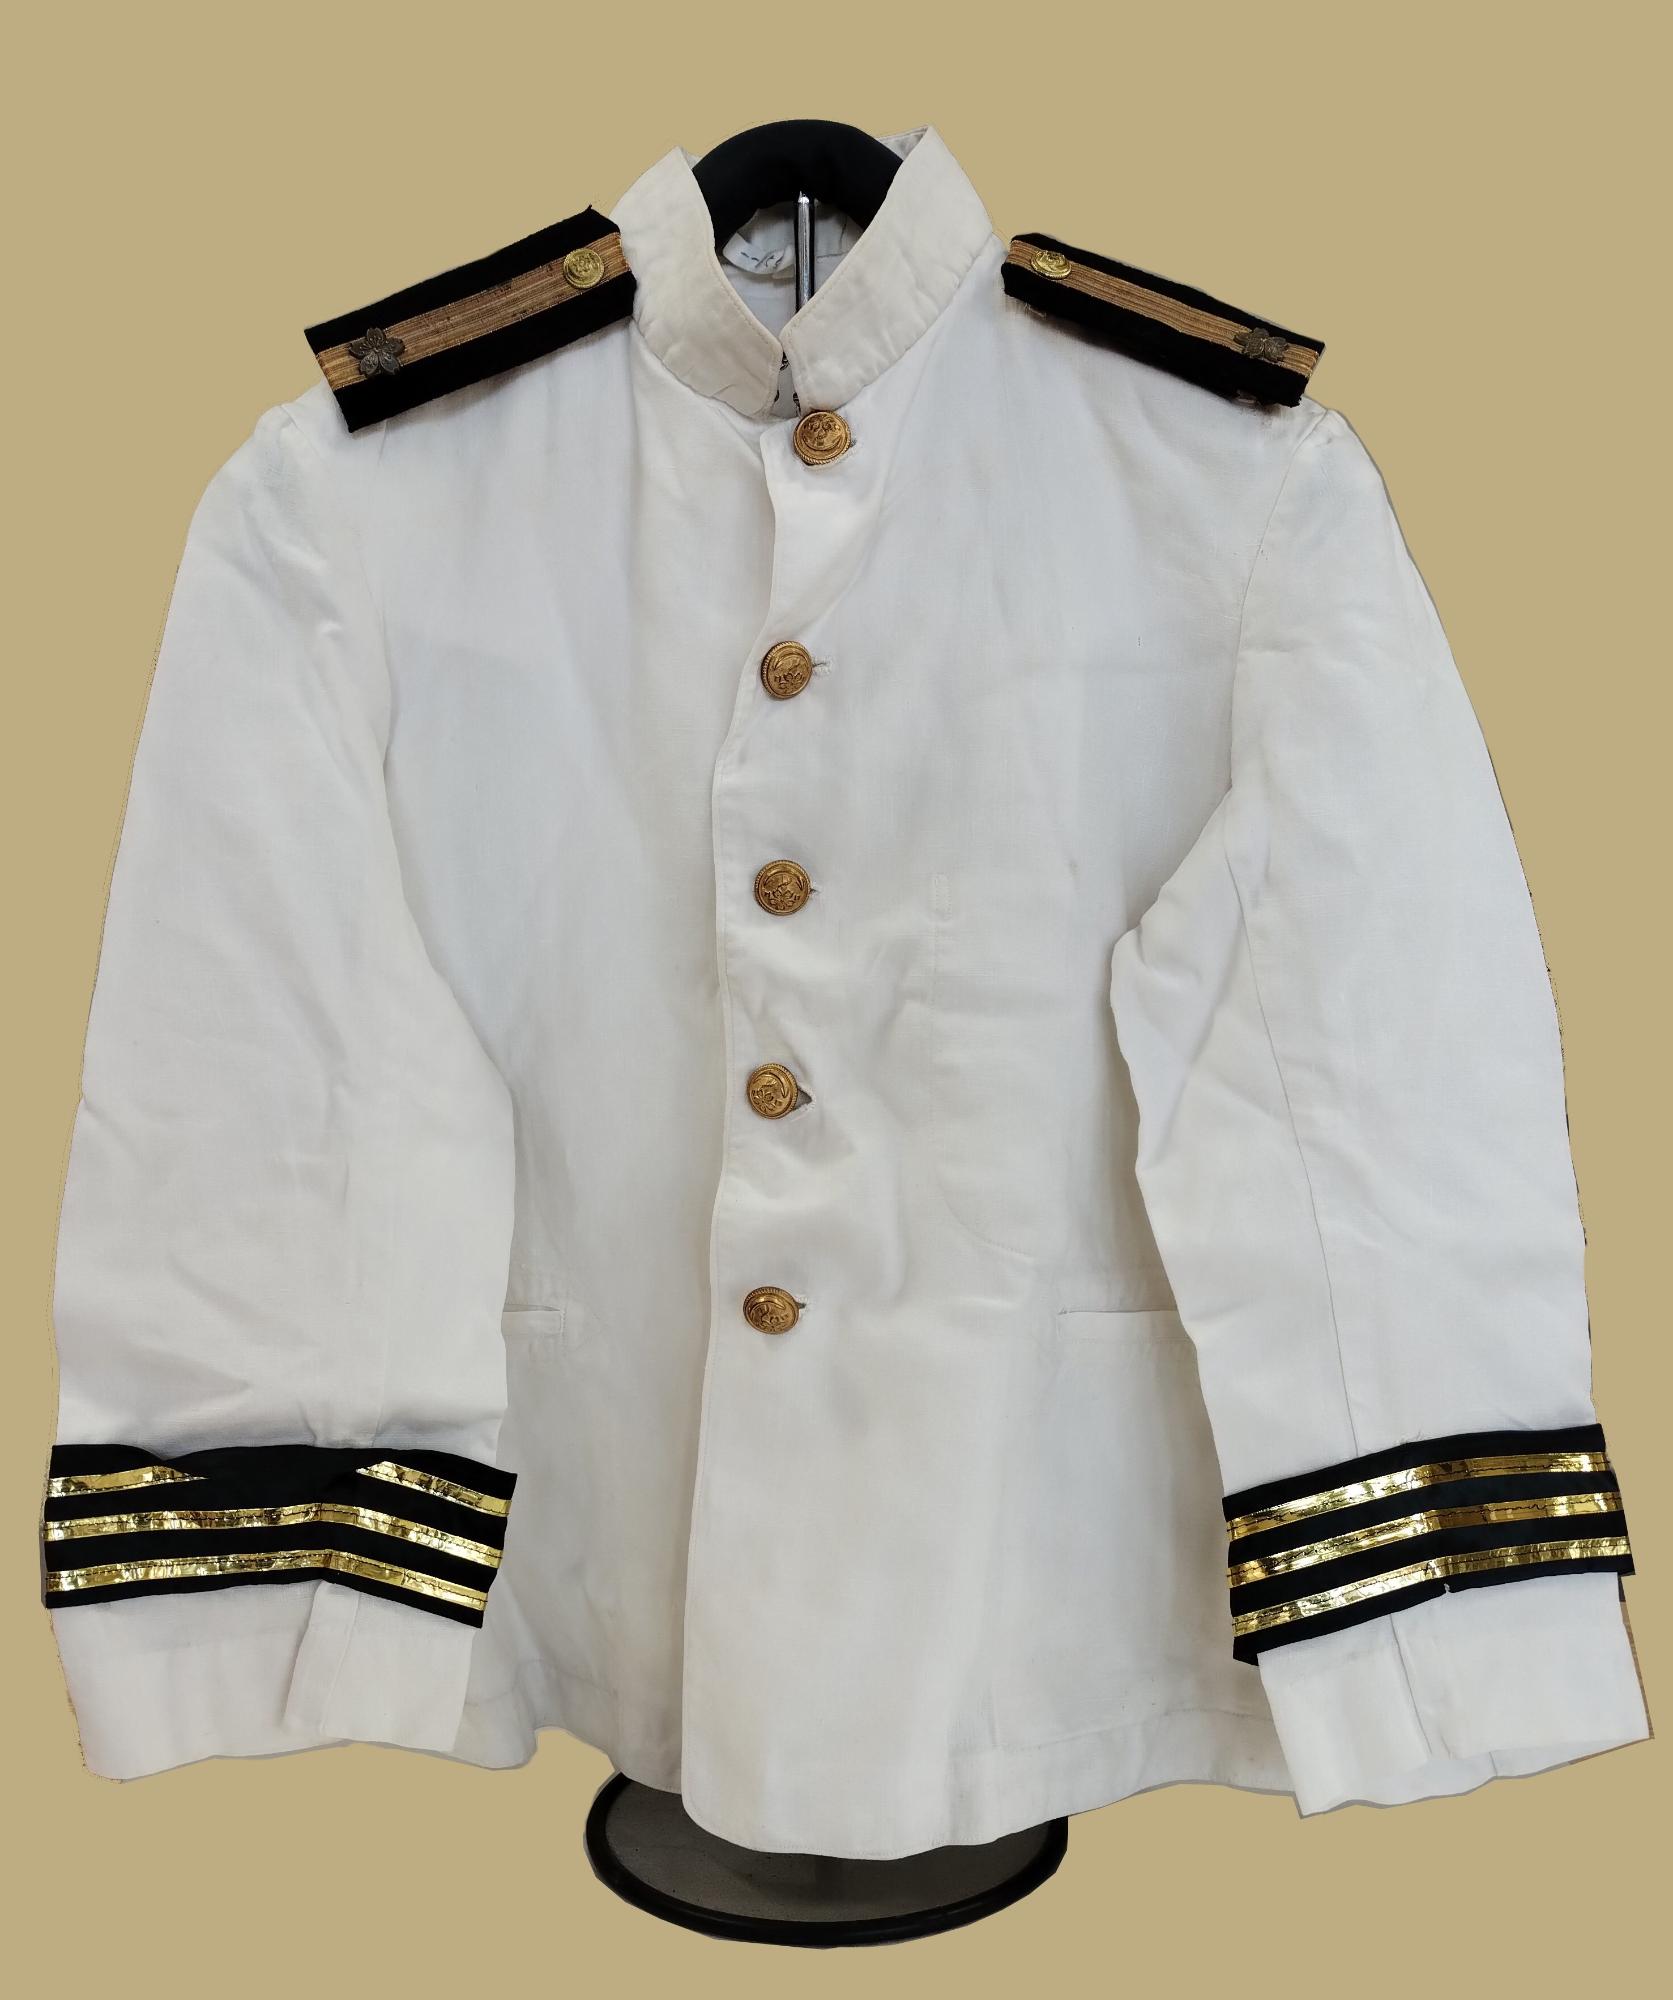 海軍の軍服上衣